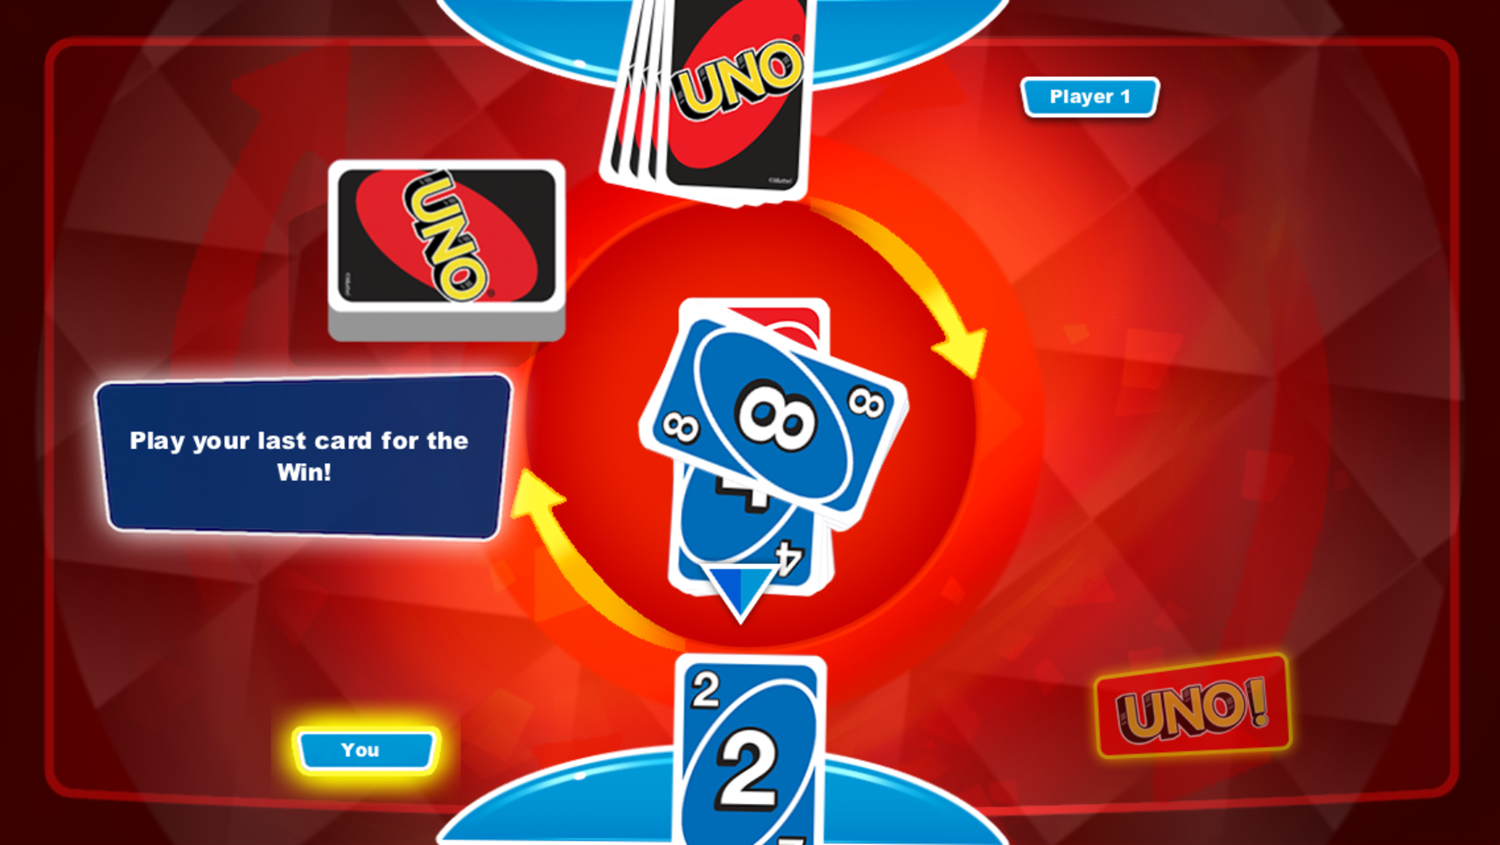 Uno Game Play Last Card Screenshot.